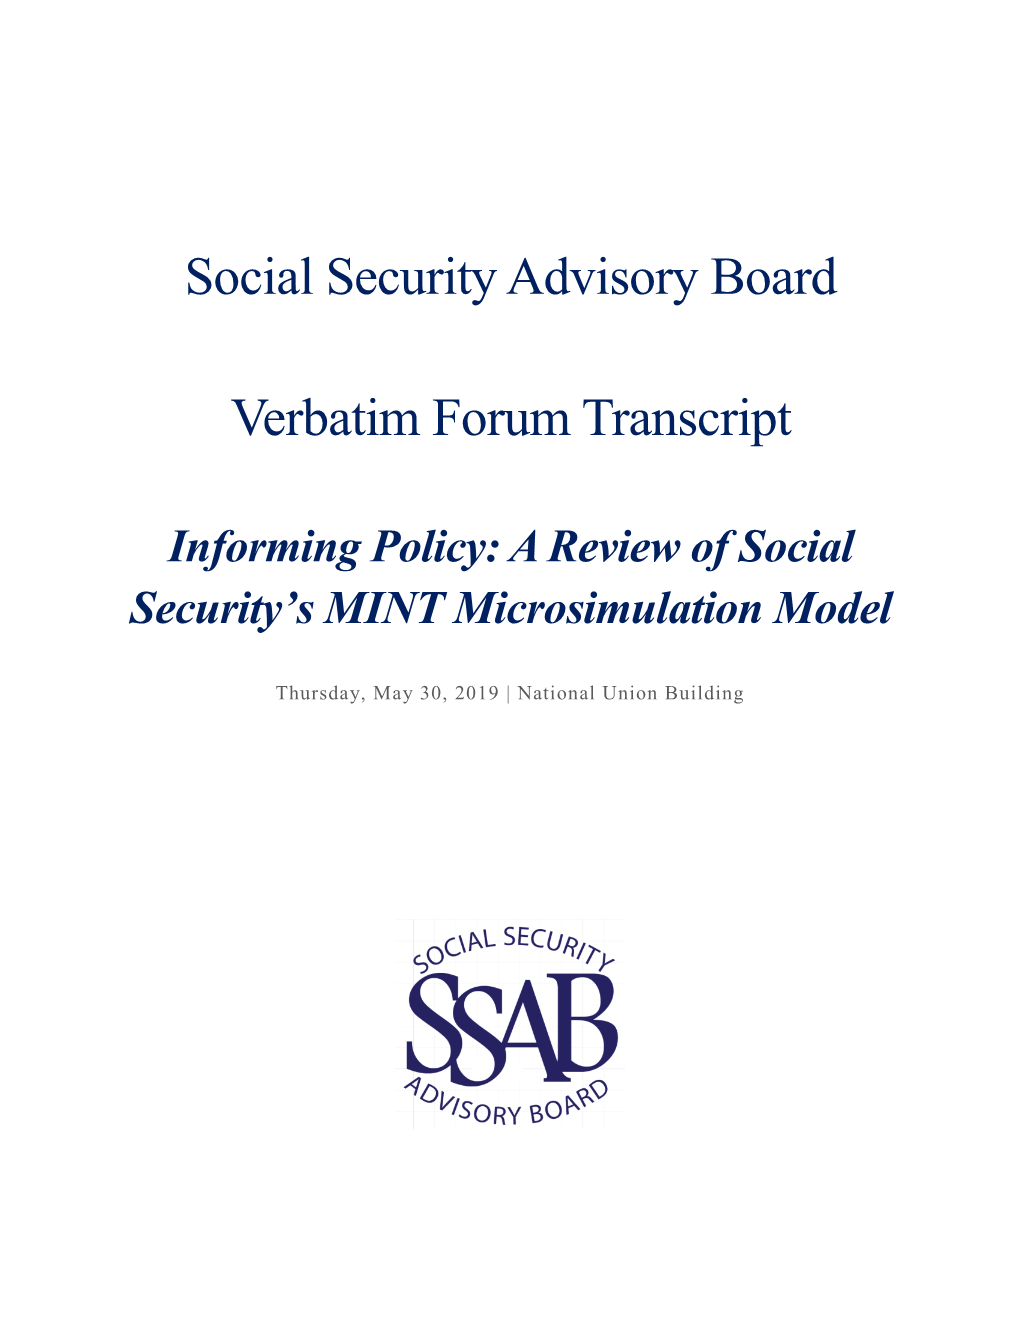 Social Security Advisory Board Verbatim Forum Transcript